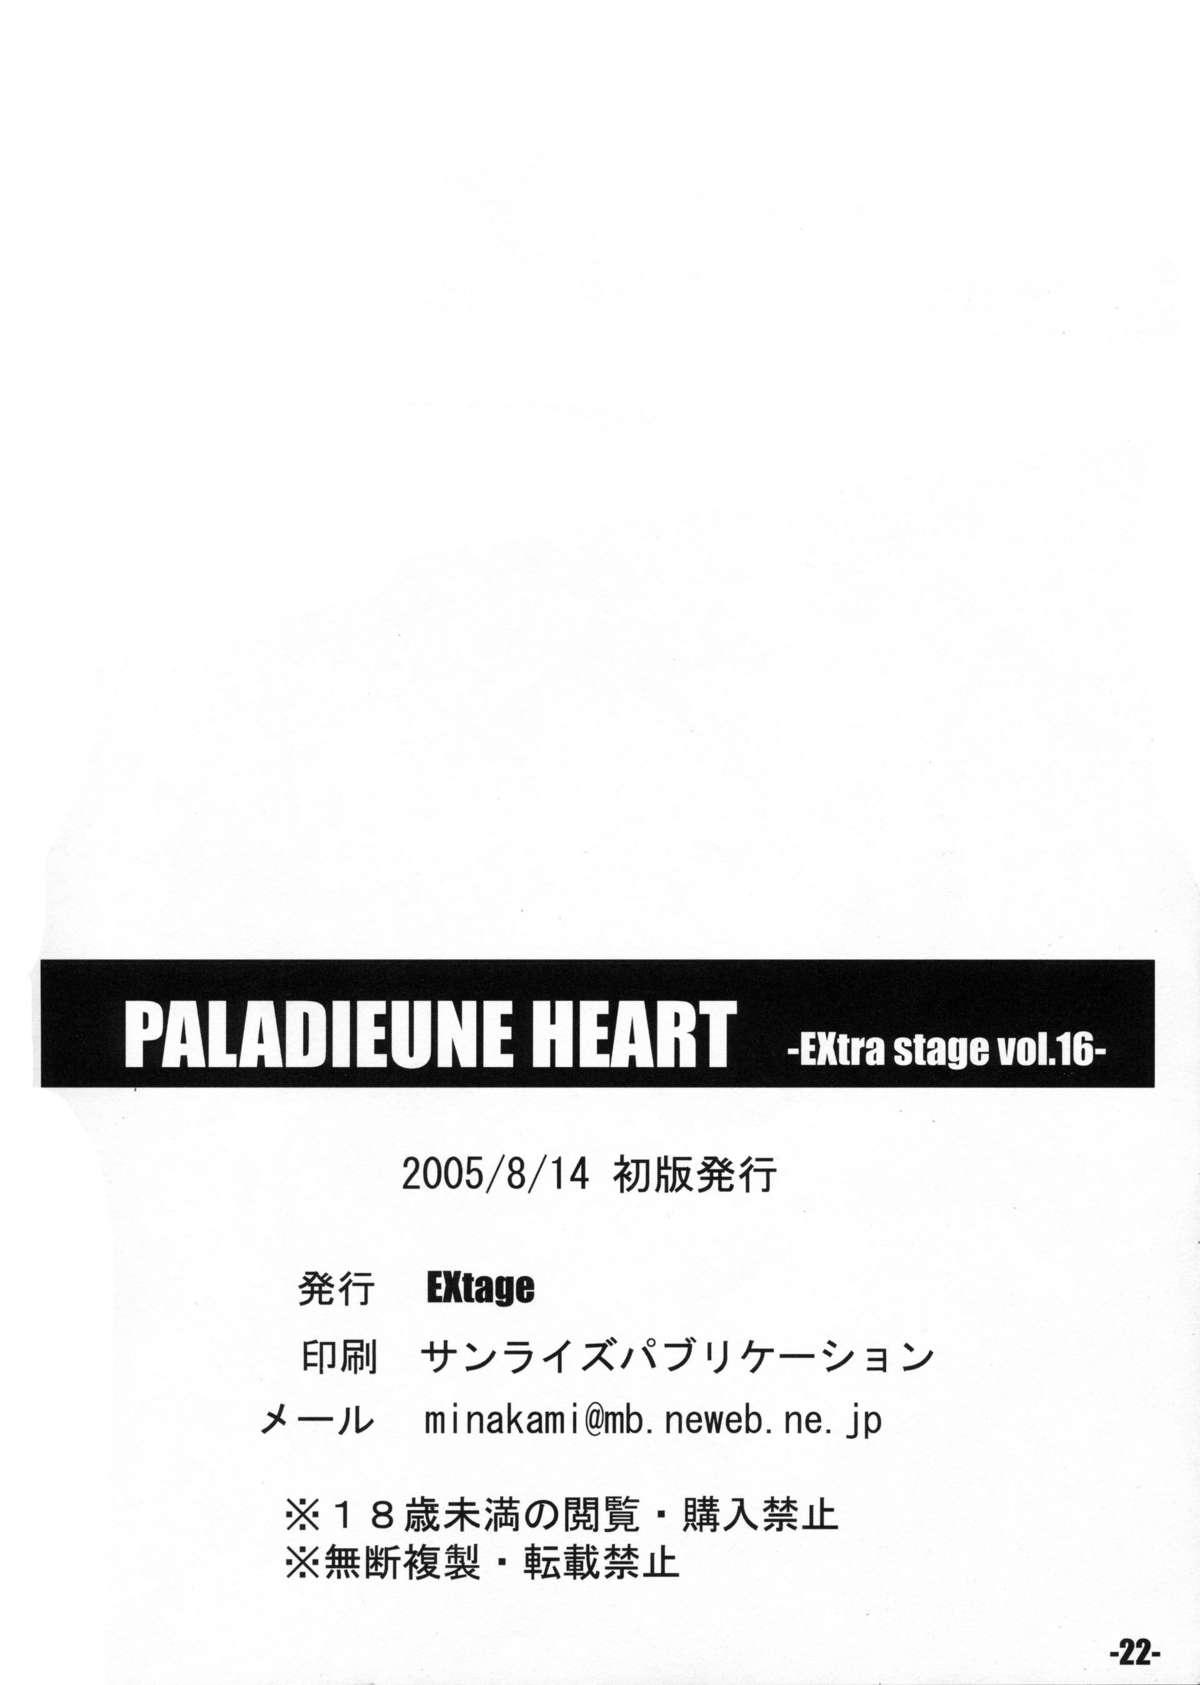 EXtra stage Vol.16 PALADIEUNE HEART 21